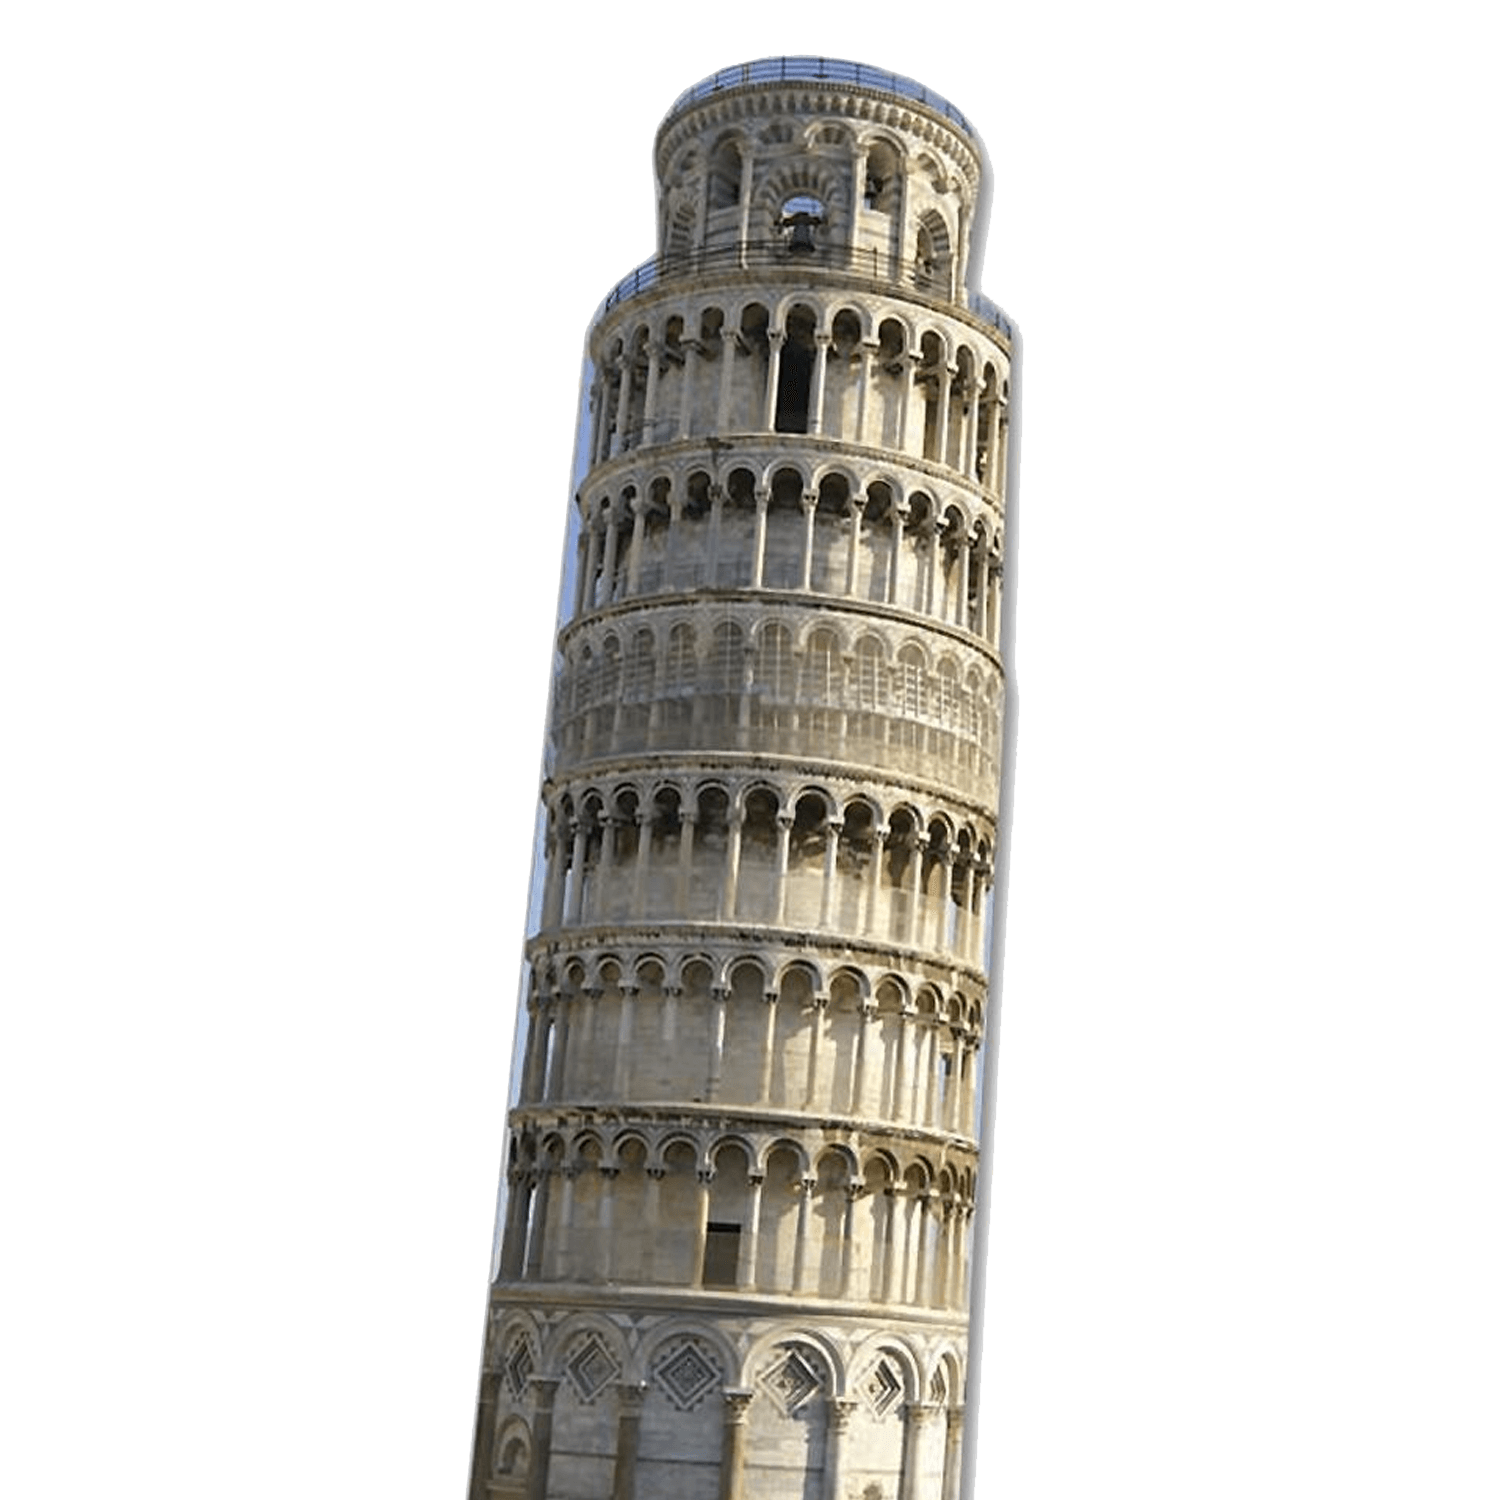 round tower